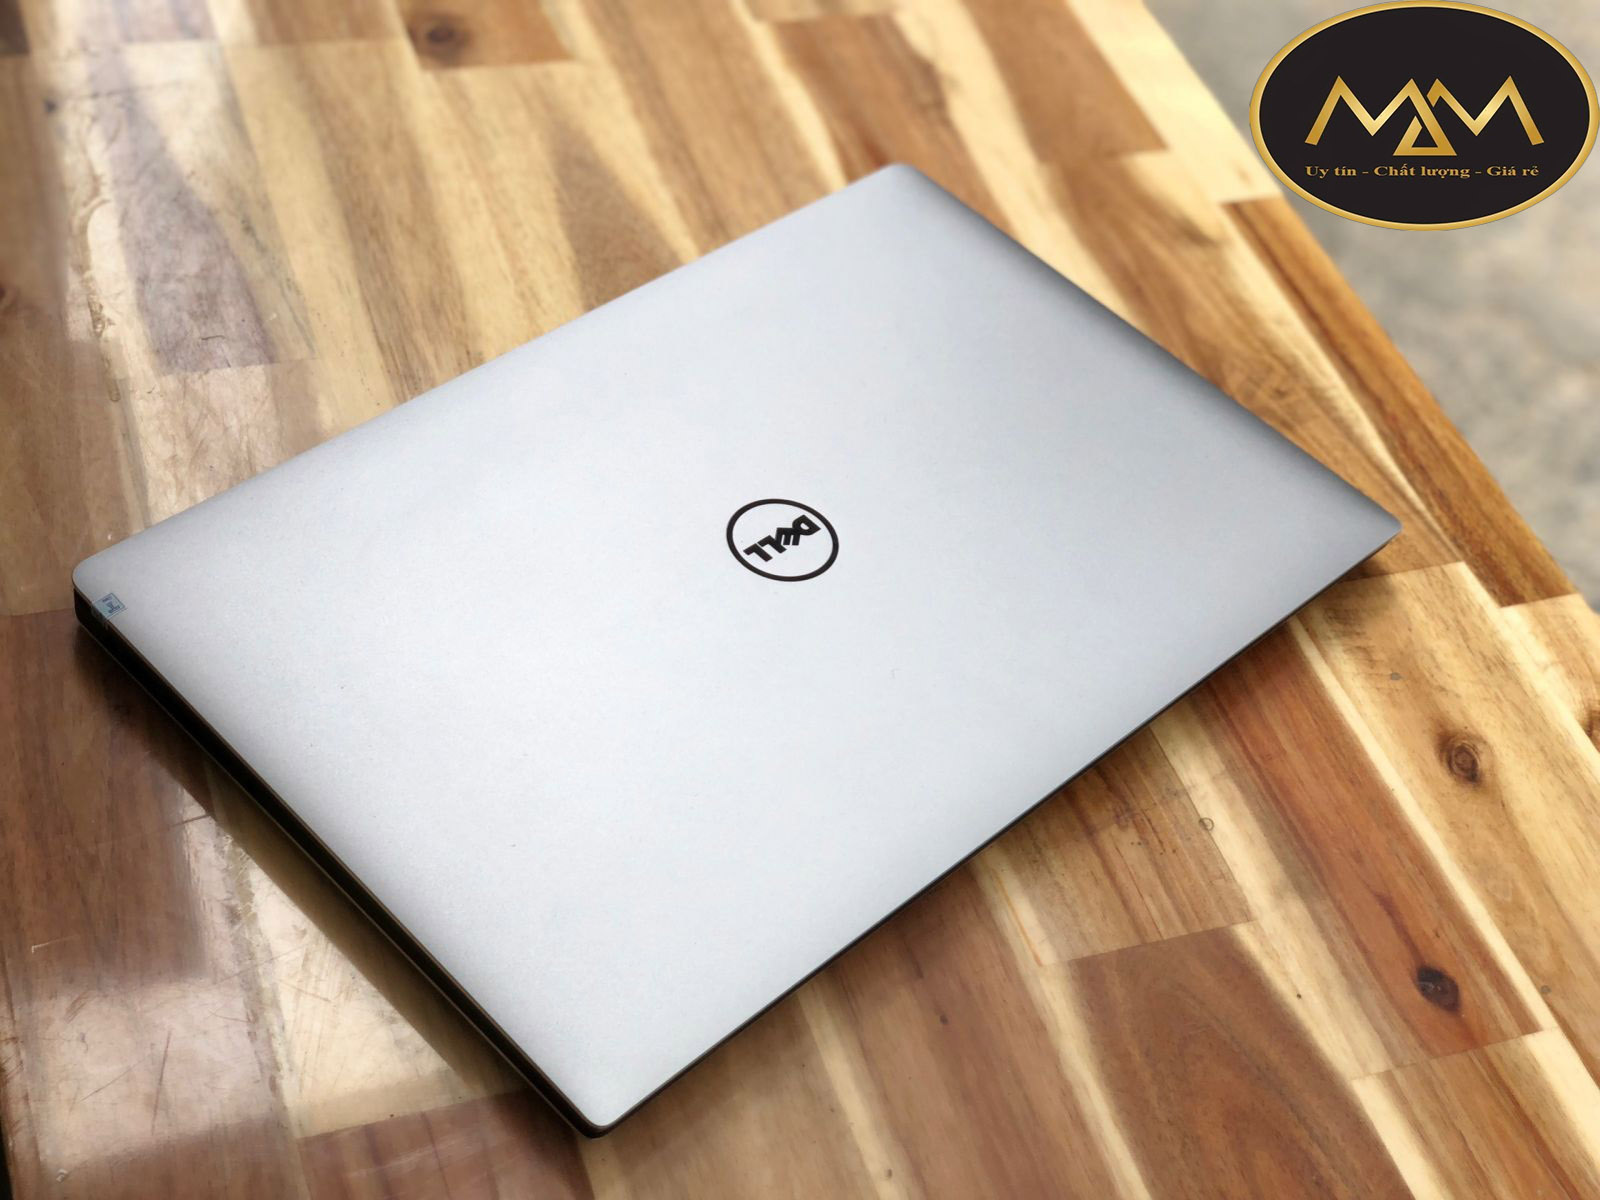 Laptop-Dell-core-i7-cũ-TPHCM-chất-lượng